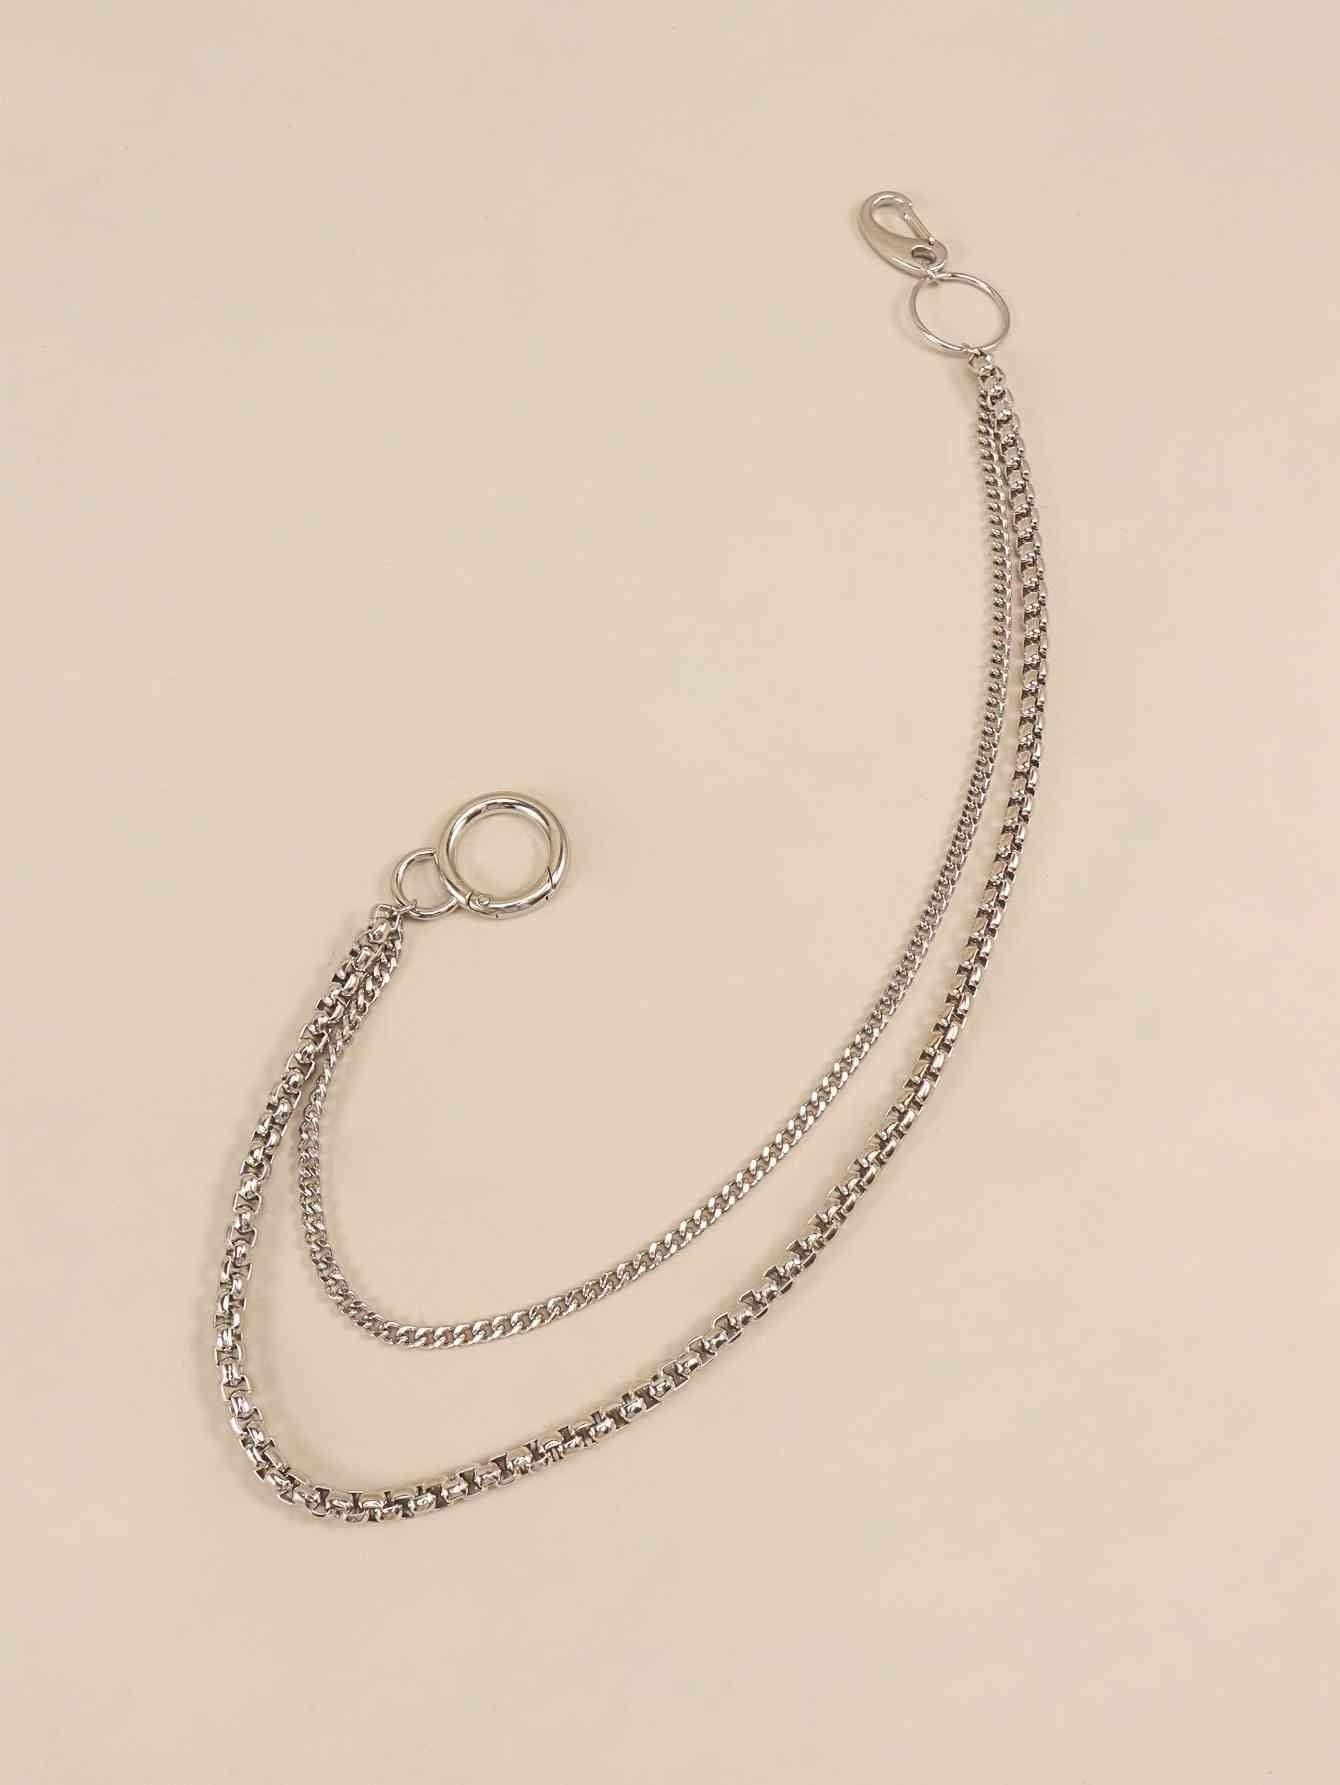 Bona Fide Fashion - Double-Layered Metal Chain Belt - Jewelry - Bona Fide Fashion